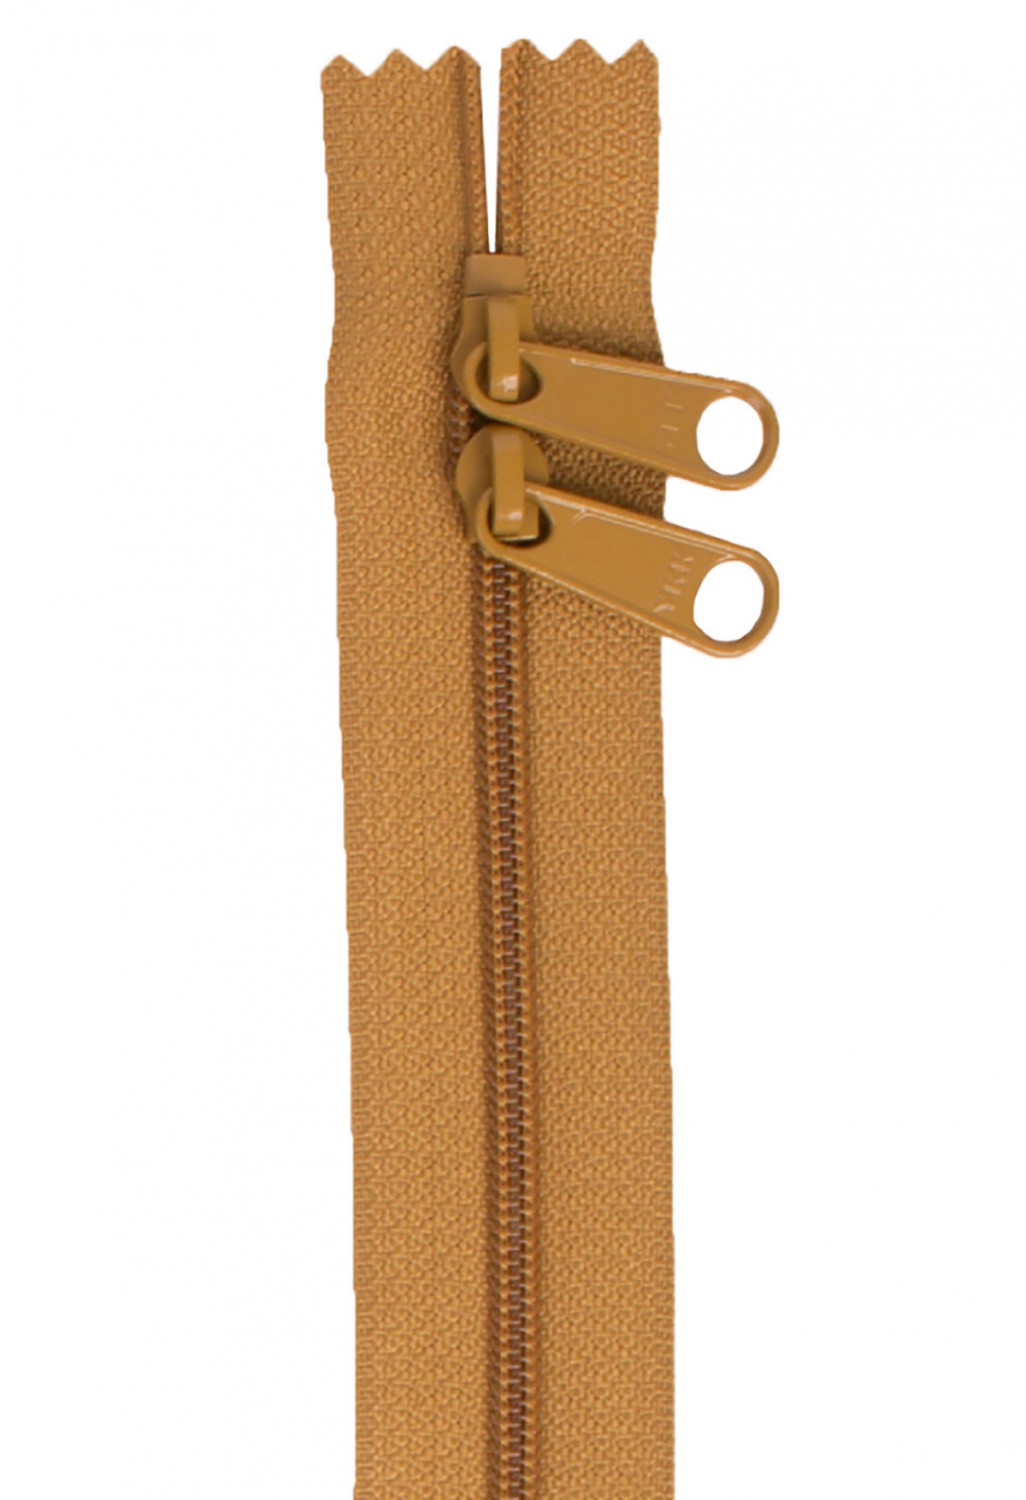 Handbag zipper 30inch-golden 170